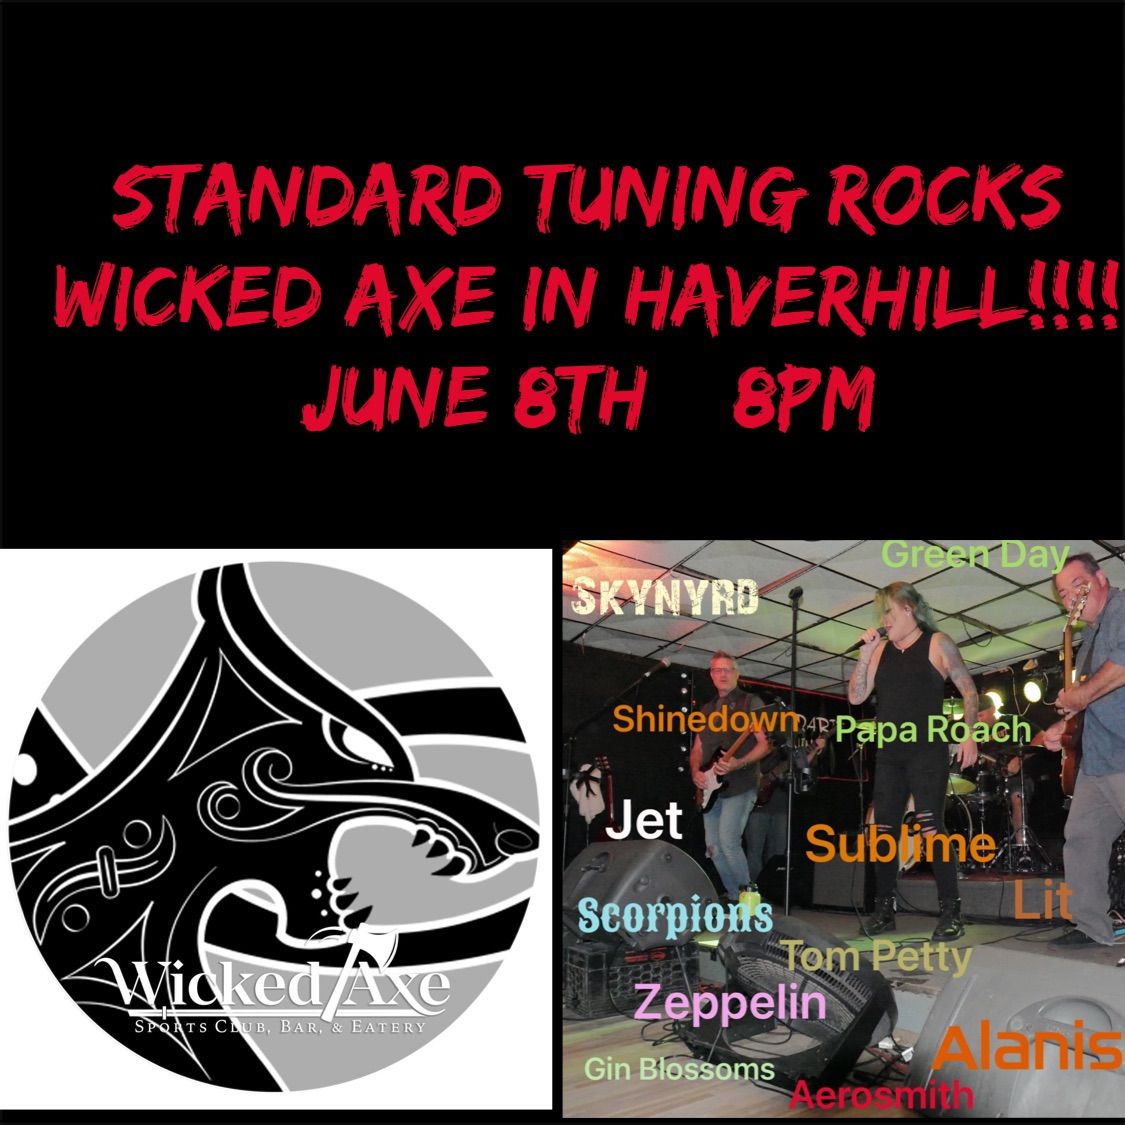 Standard Tuning rocks Wicked Axe in Haverhill!!